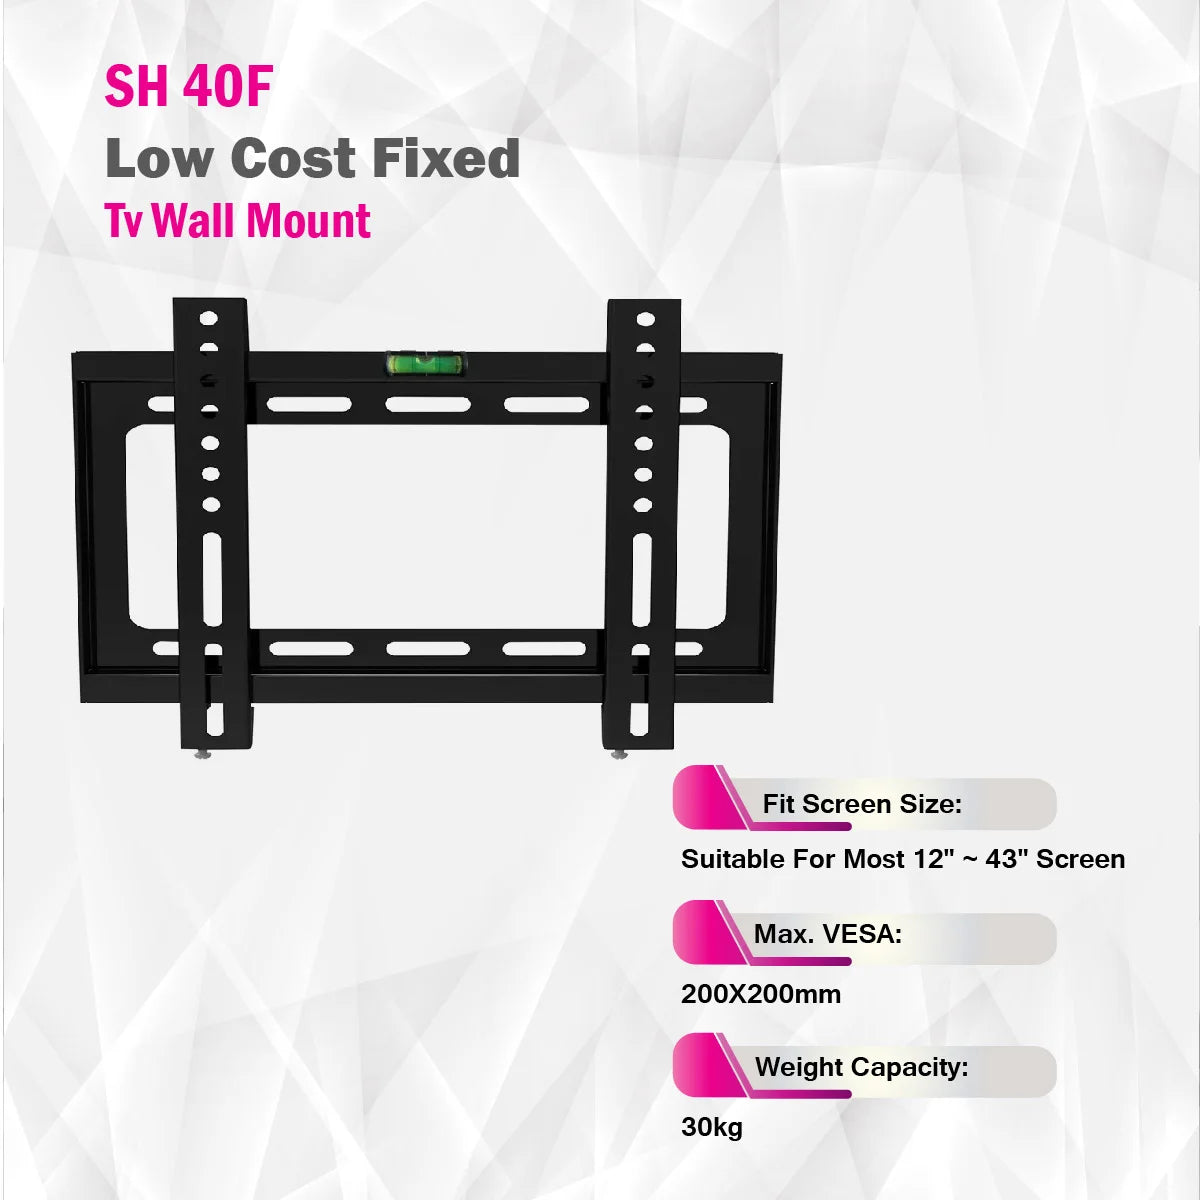 Skill Tech SH 40F - Low Cost Fixed TV Wall Mount